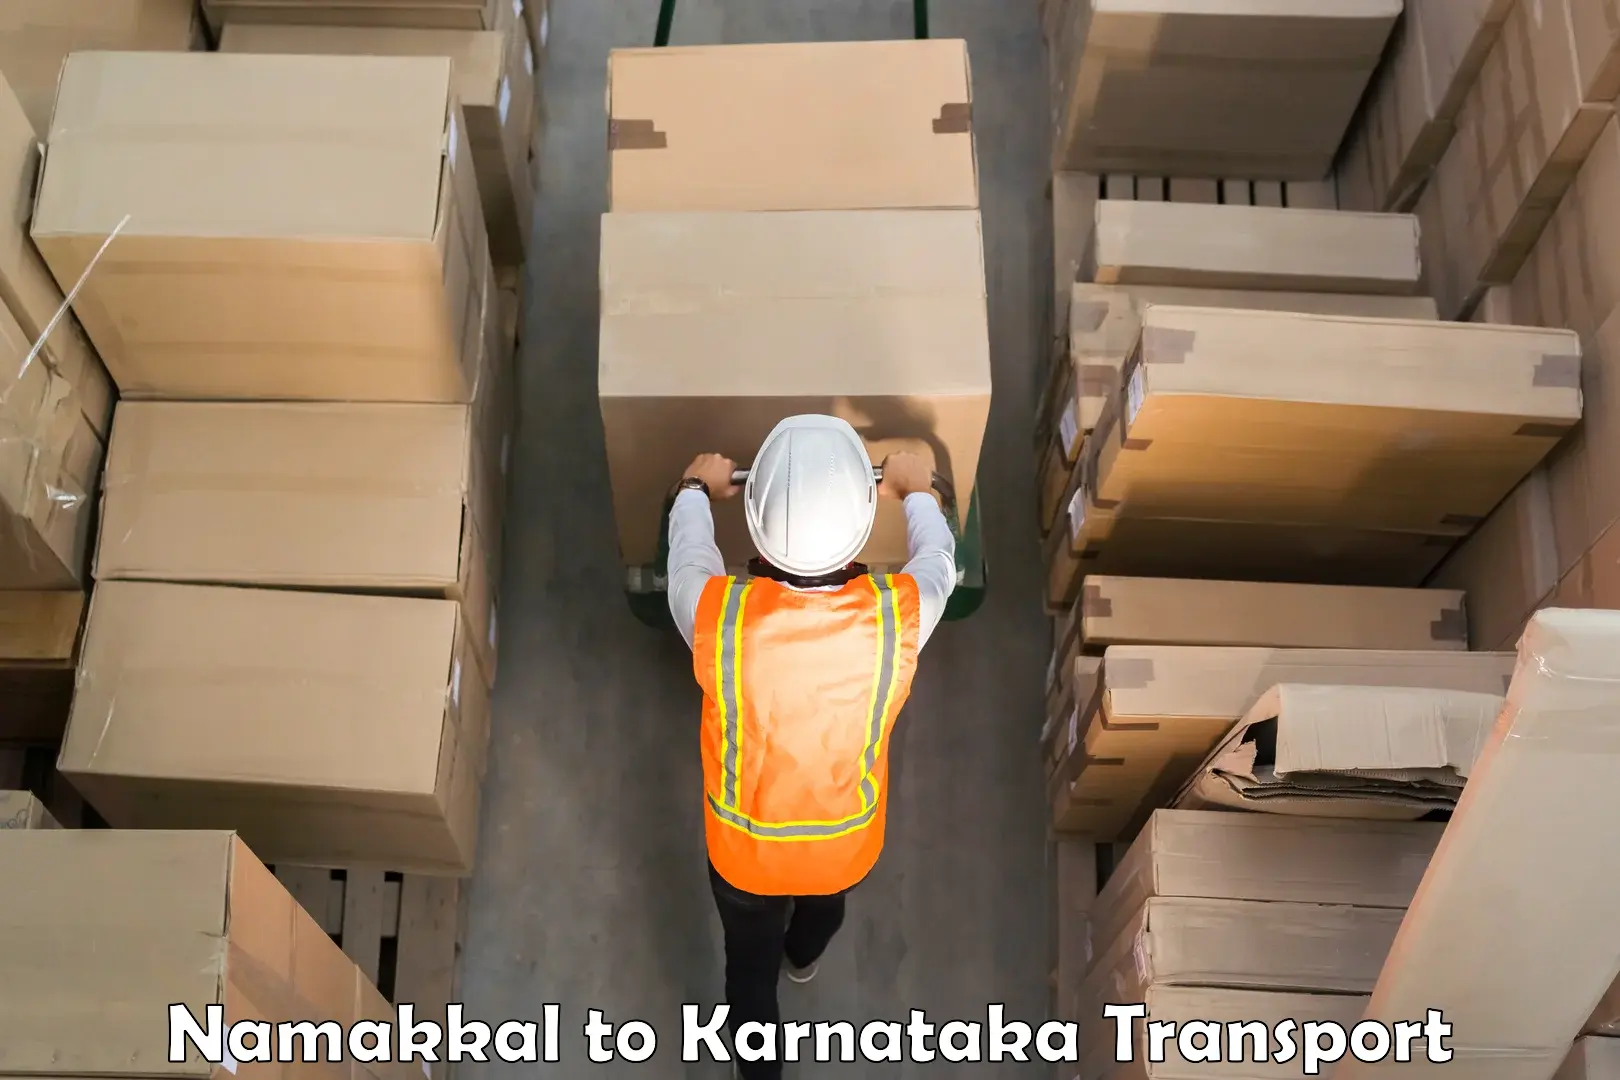 Shipping partner Namakkal to Karkala